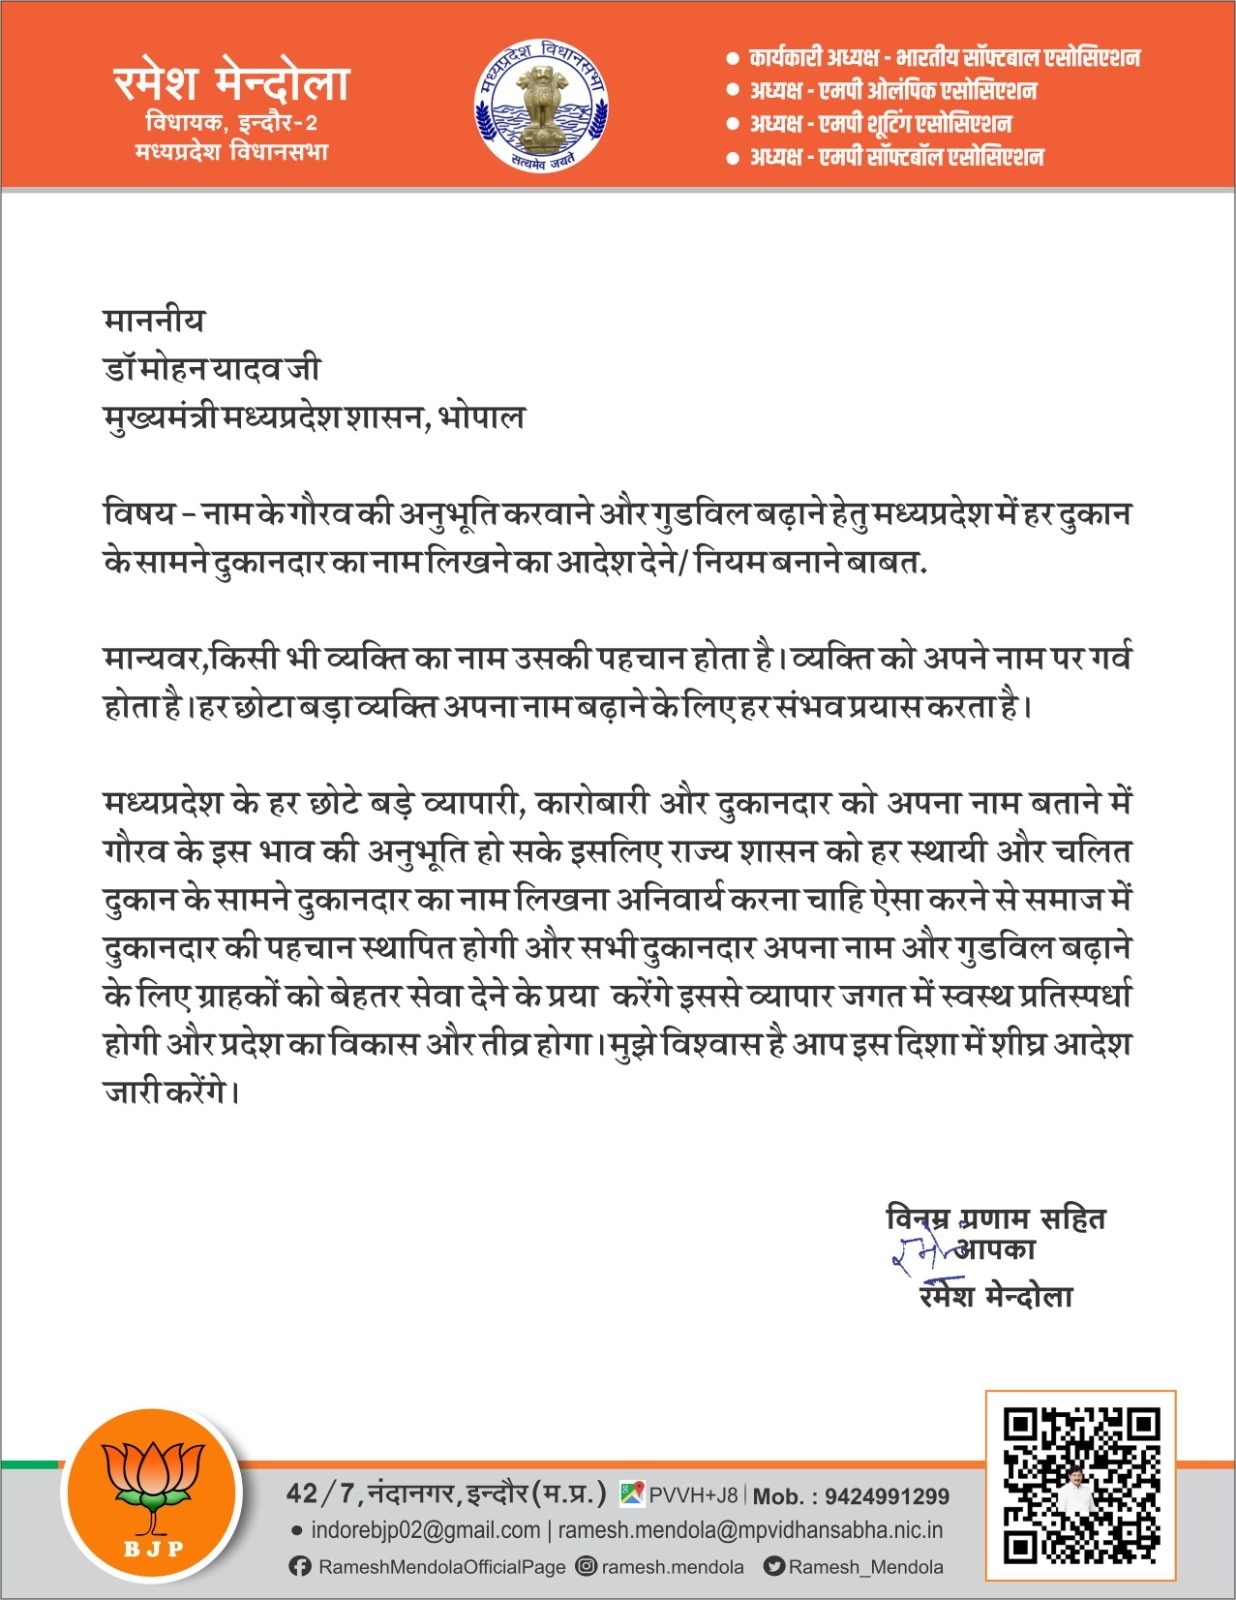 Kanwar Yatra Row: After UP & Uttarakhand, MP BJP Calls For ‘Nameplate’ Diktat On All Shops